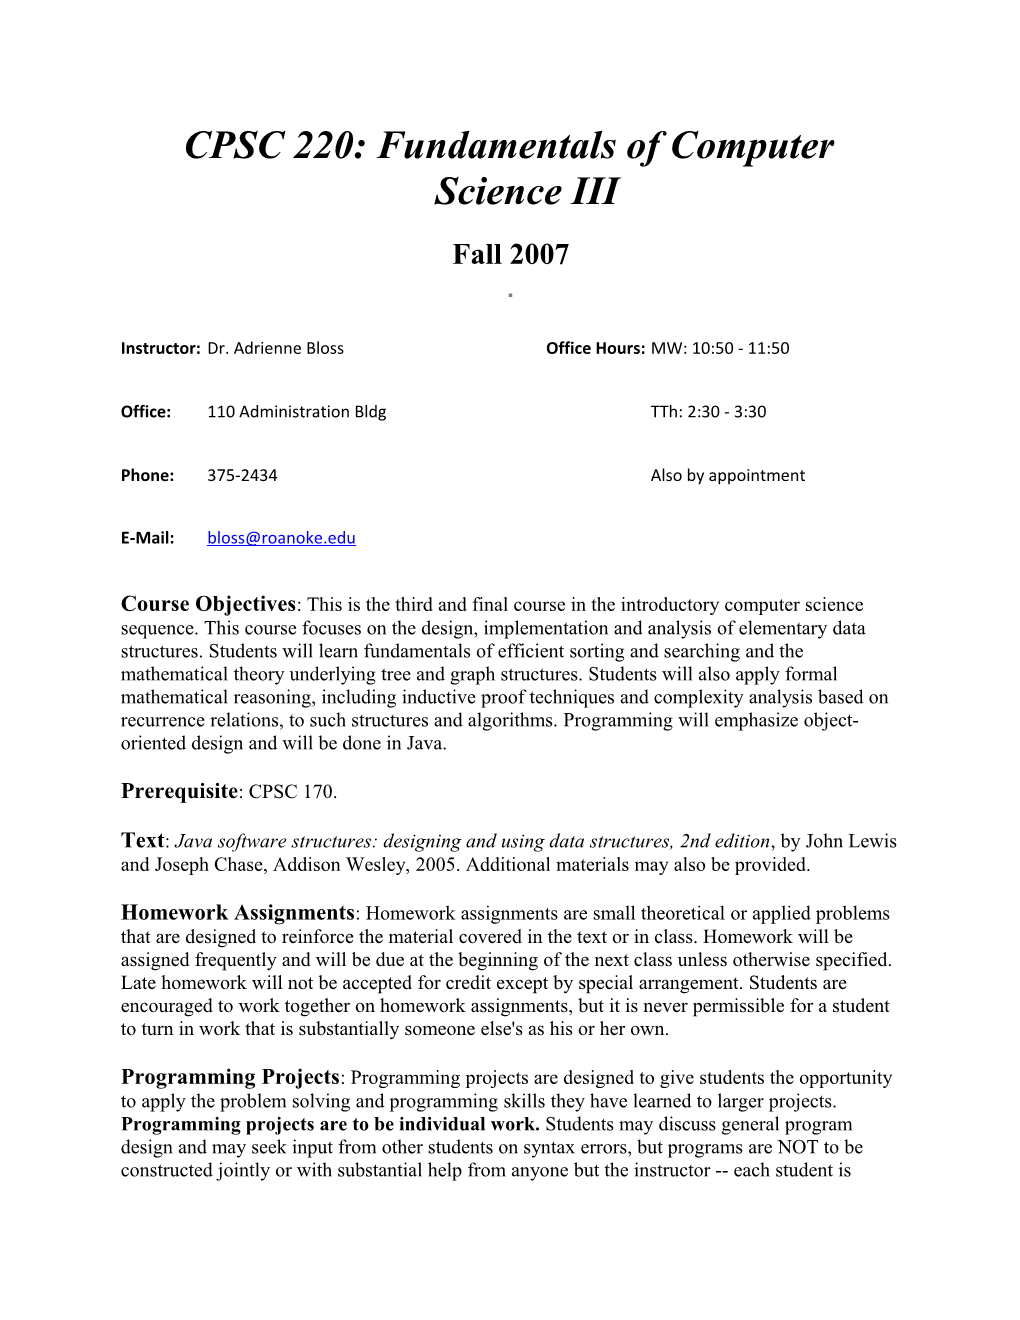 CPSC 220: Fundamentals of Computer Science III